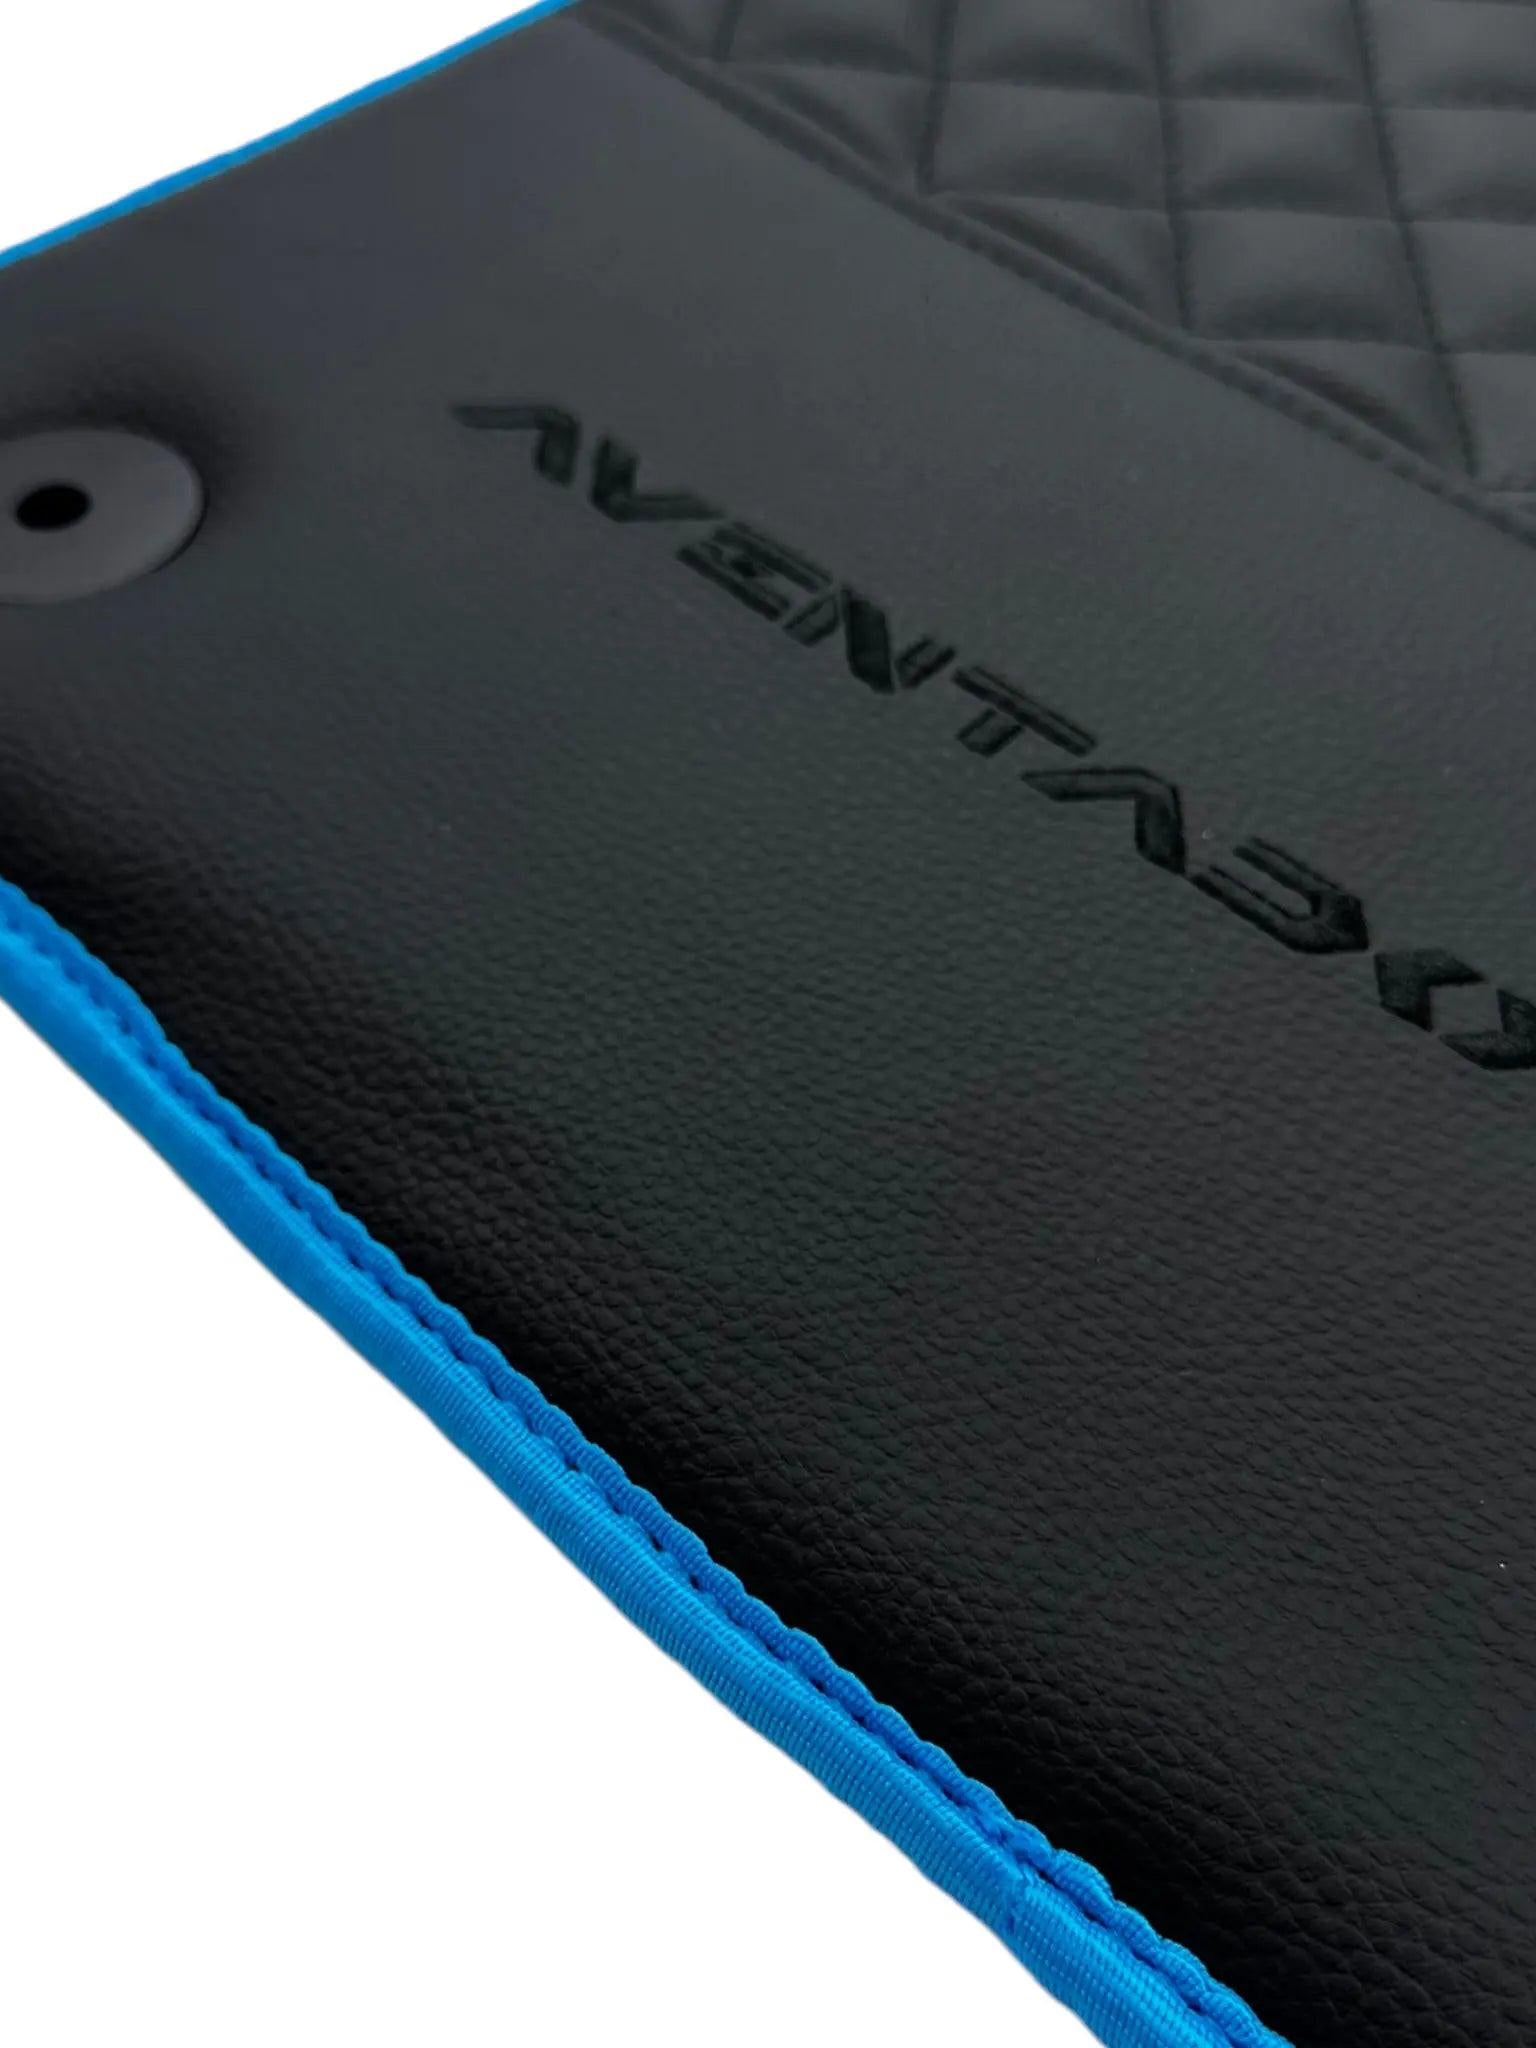 Black Leather Floor Mats For Lamborghini Aventador with Blue Trim